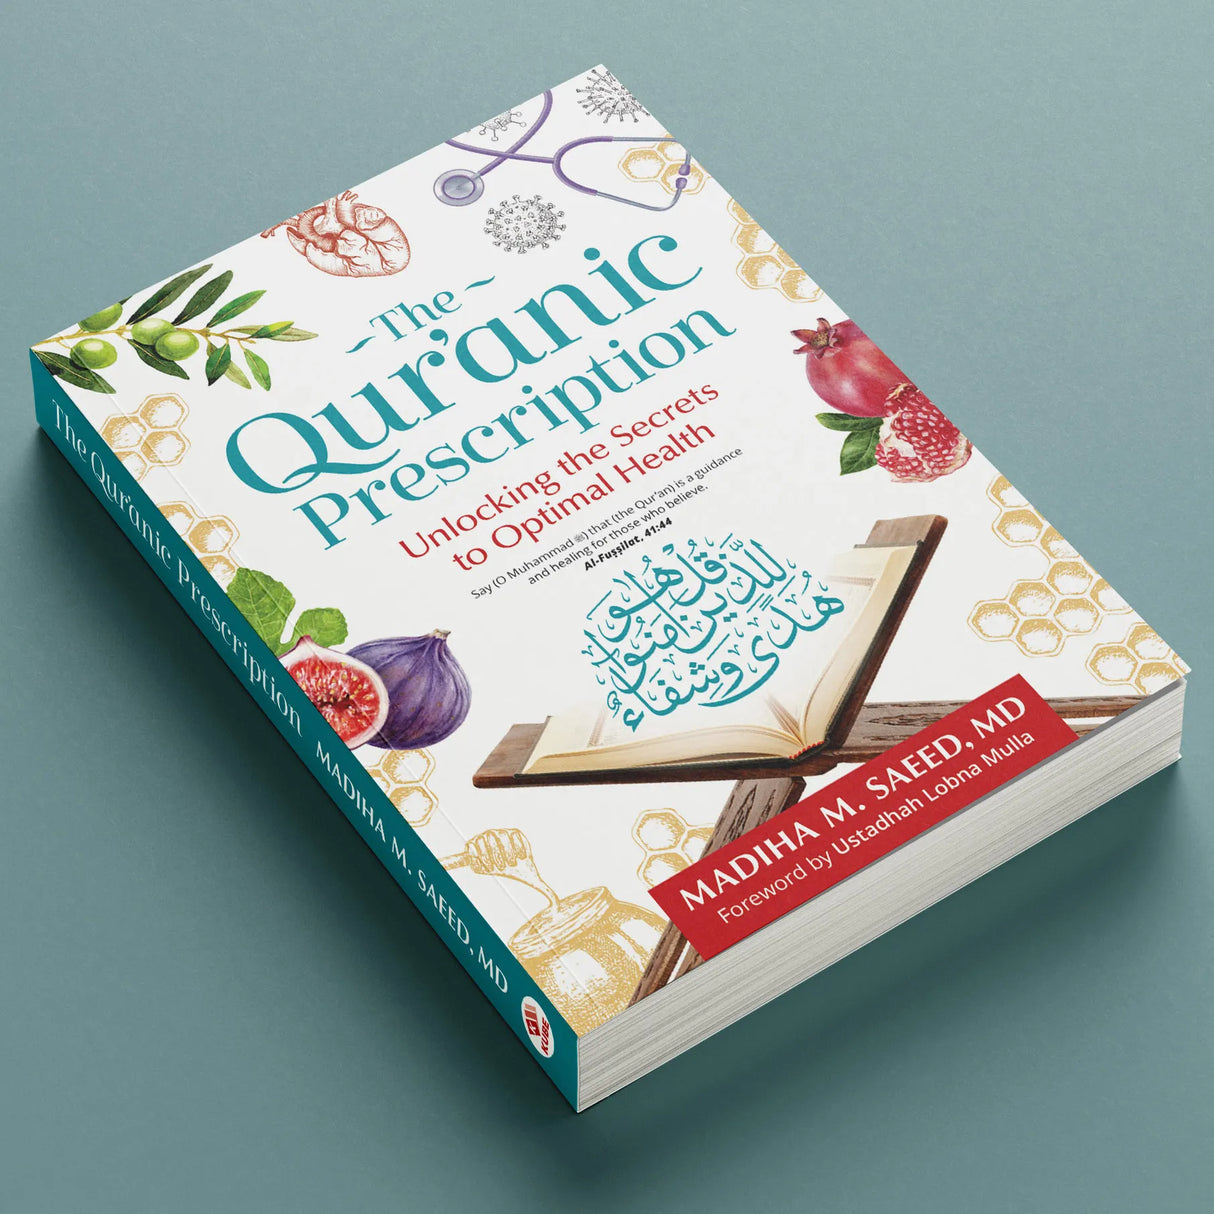 The Quranic Prescription Unlocking the Secrets to Optimal Health